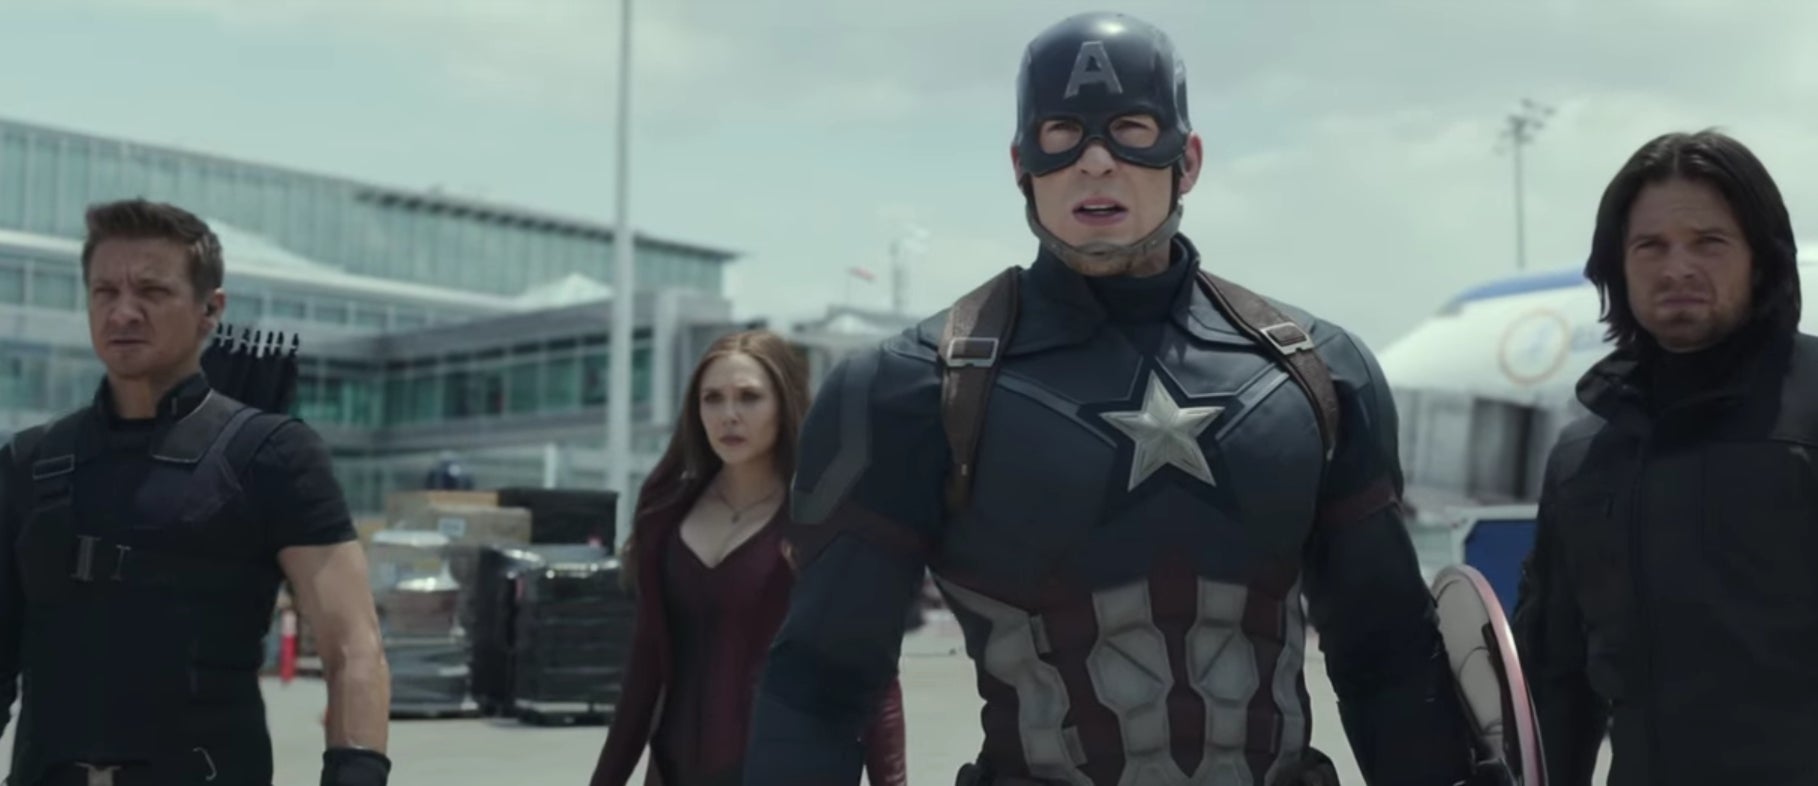 download the new for windows Captain America: Civil War